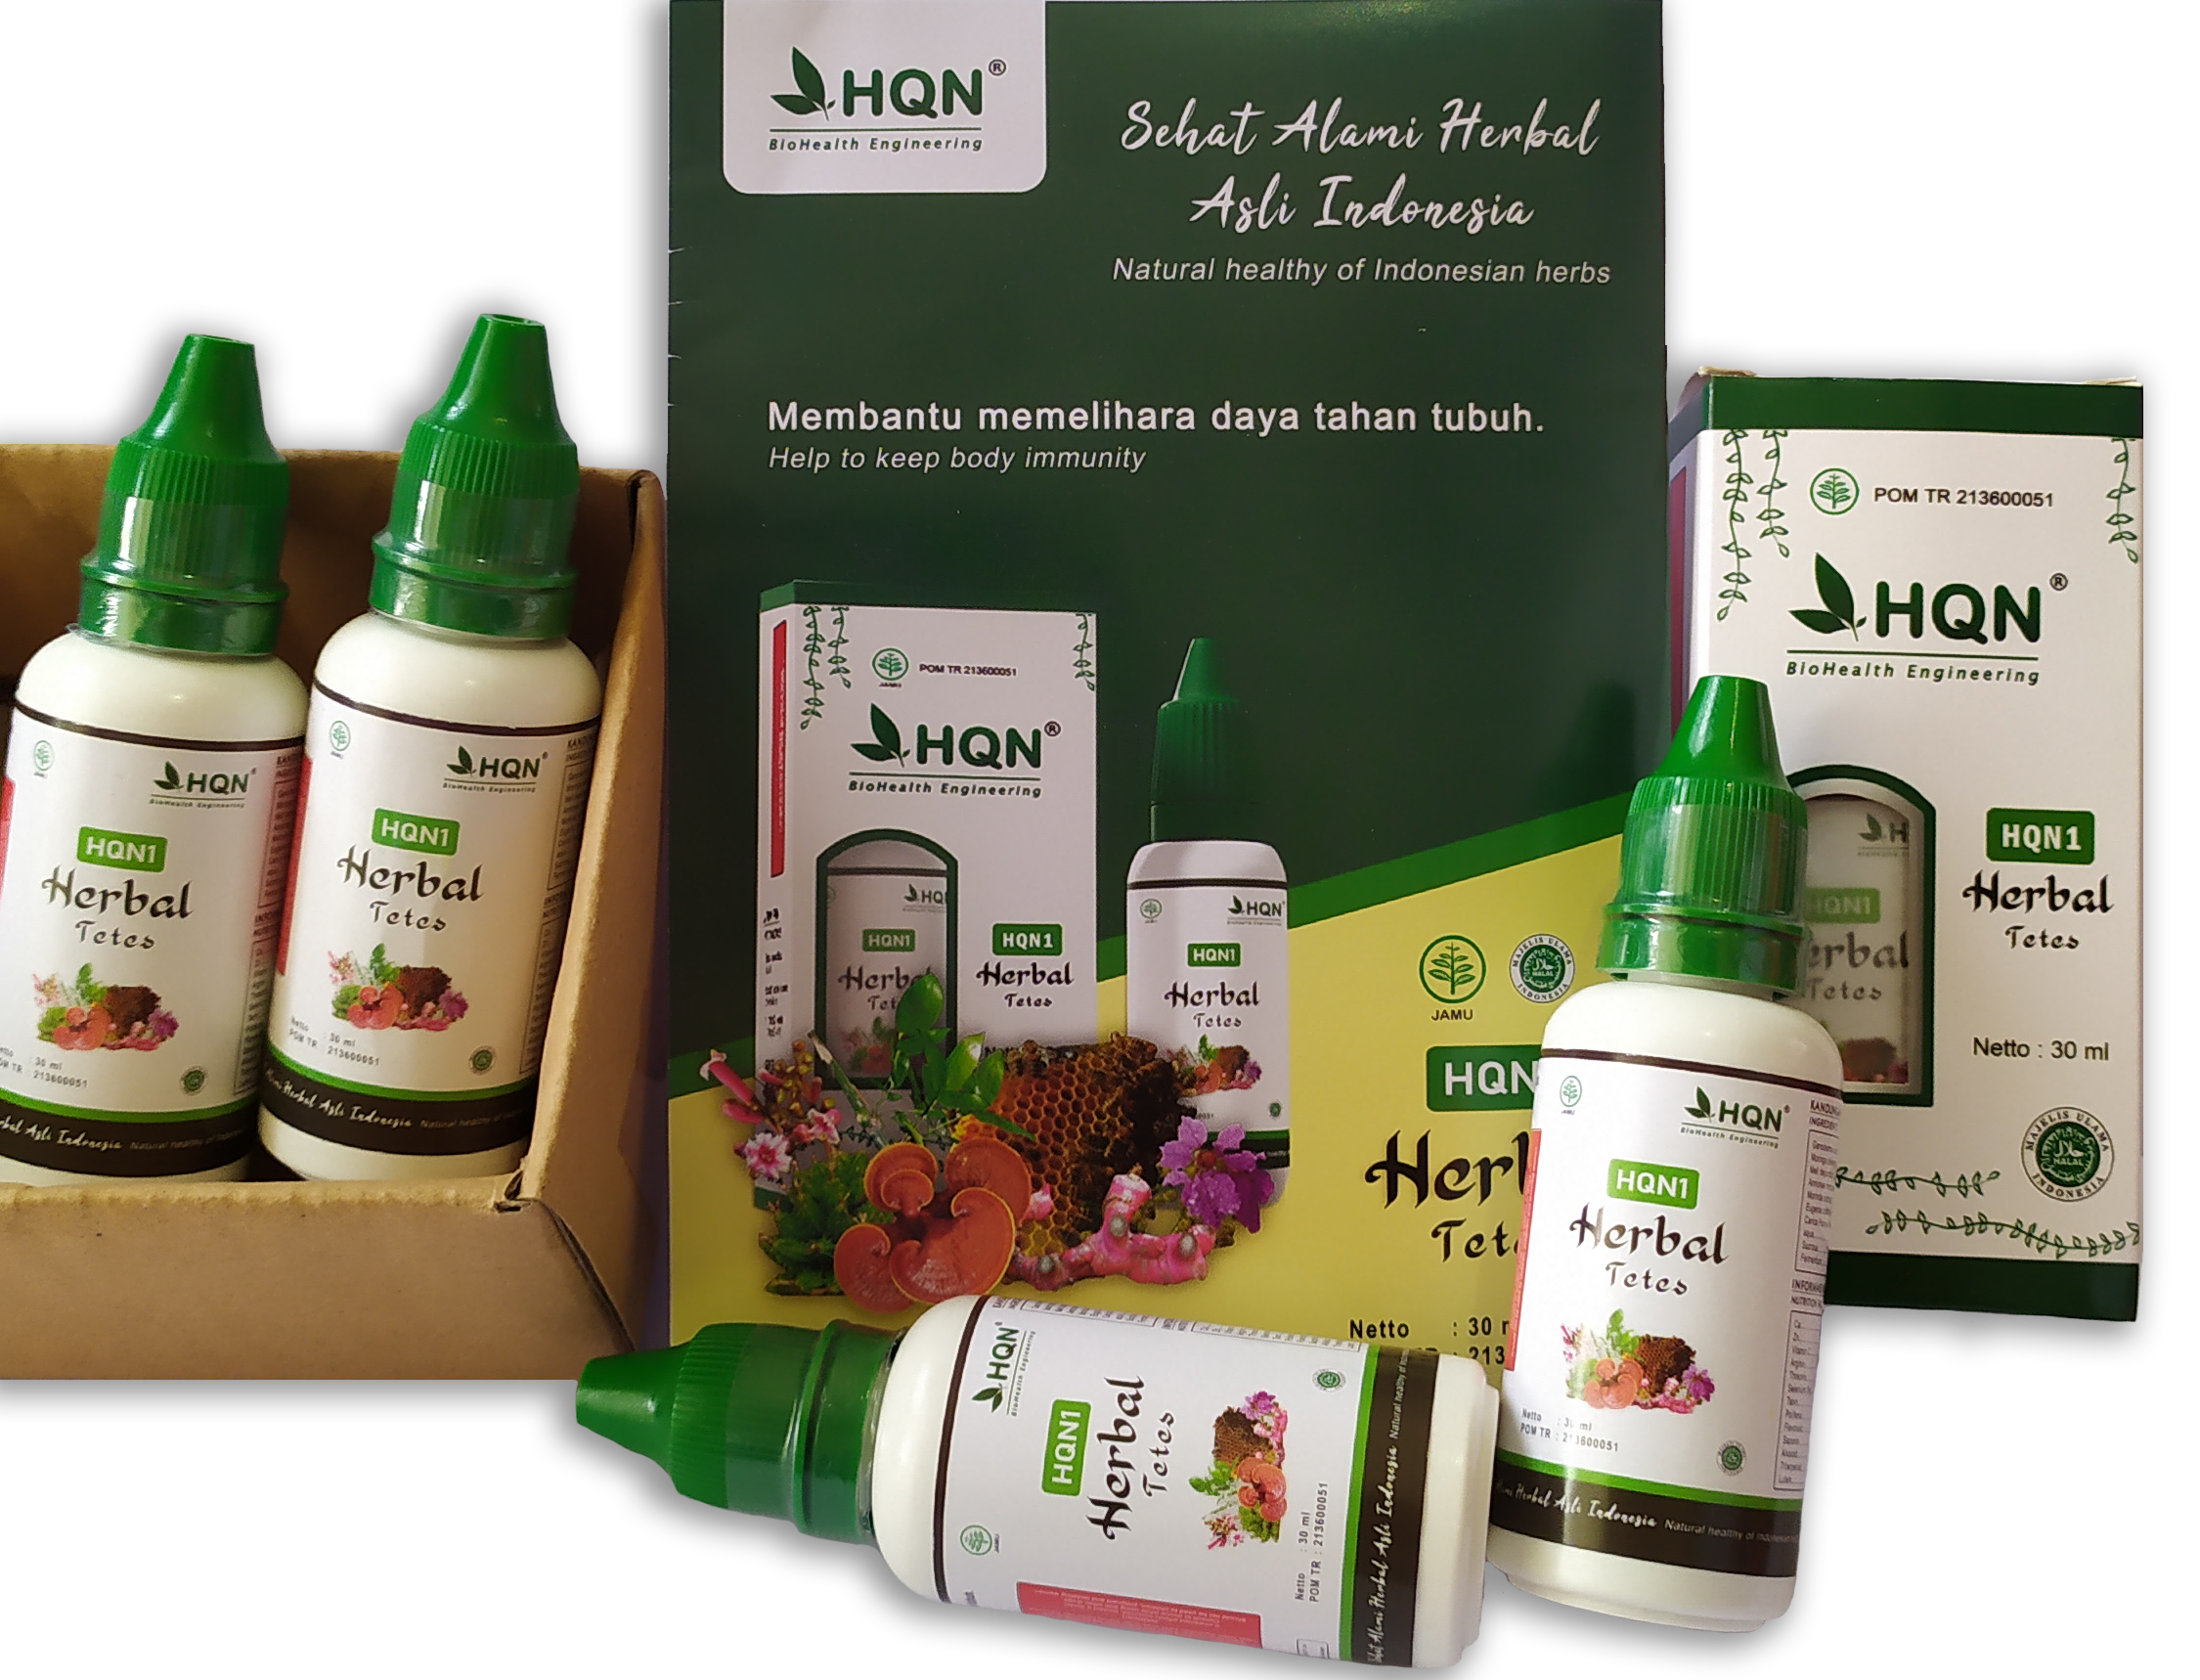 HQN1 Herbal Tetes 1 Botol